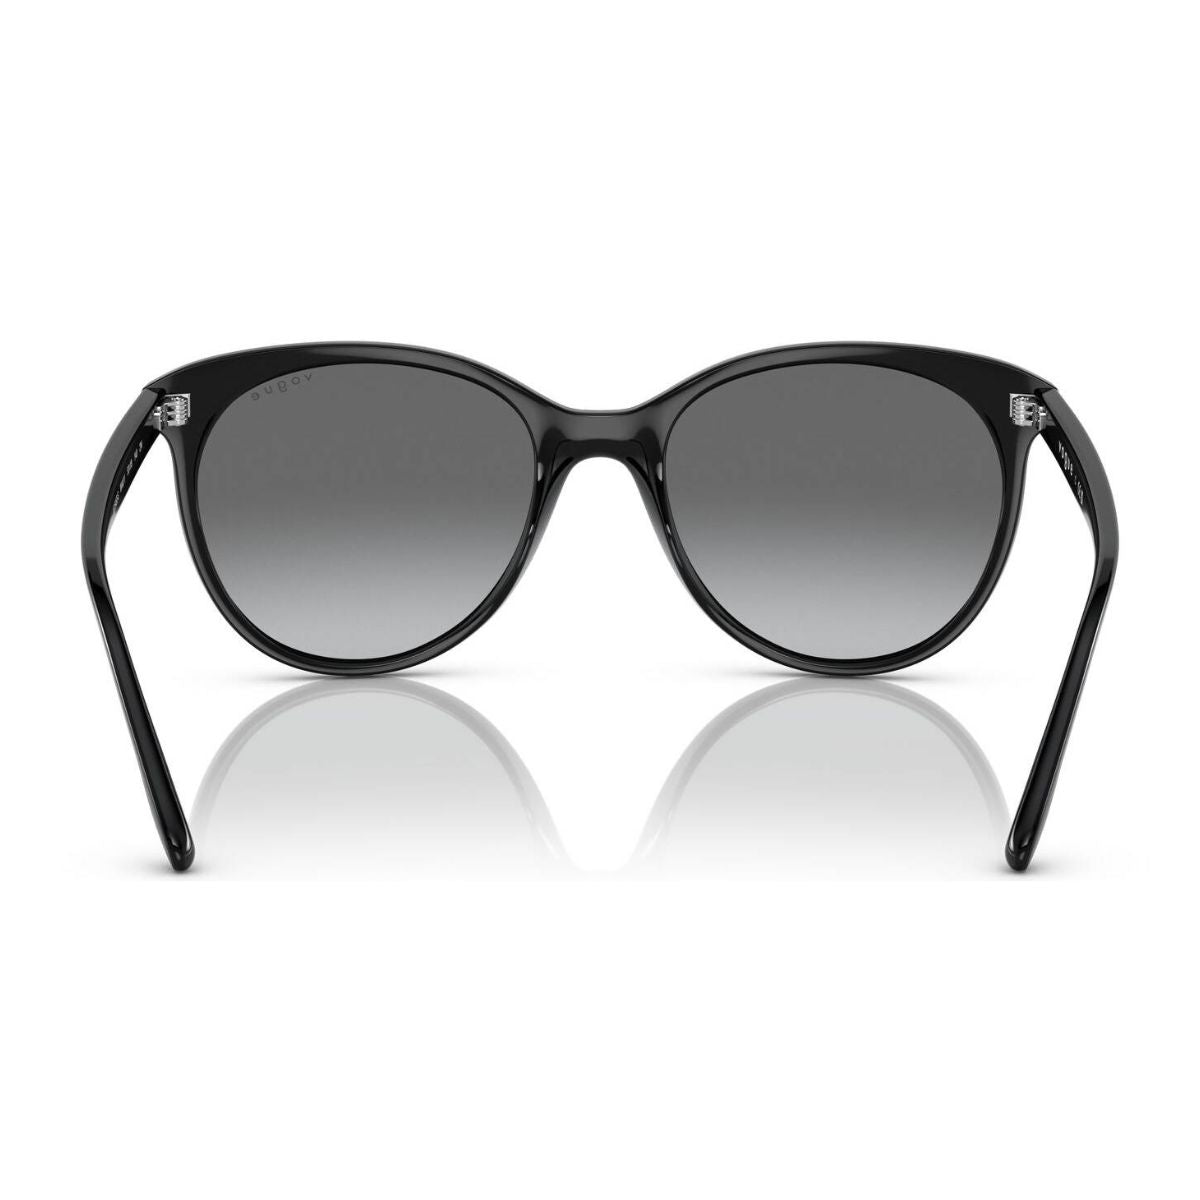 "Shop Trending Sunglasses For Womens Under 10K At Optorium"